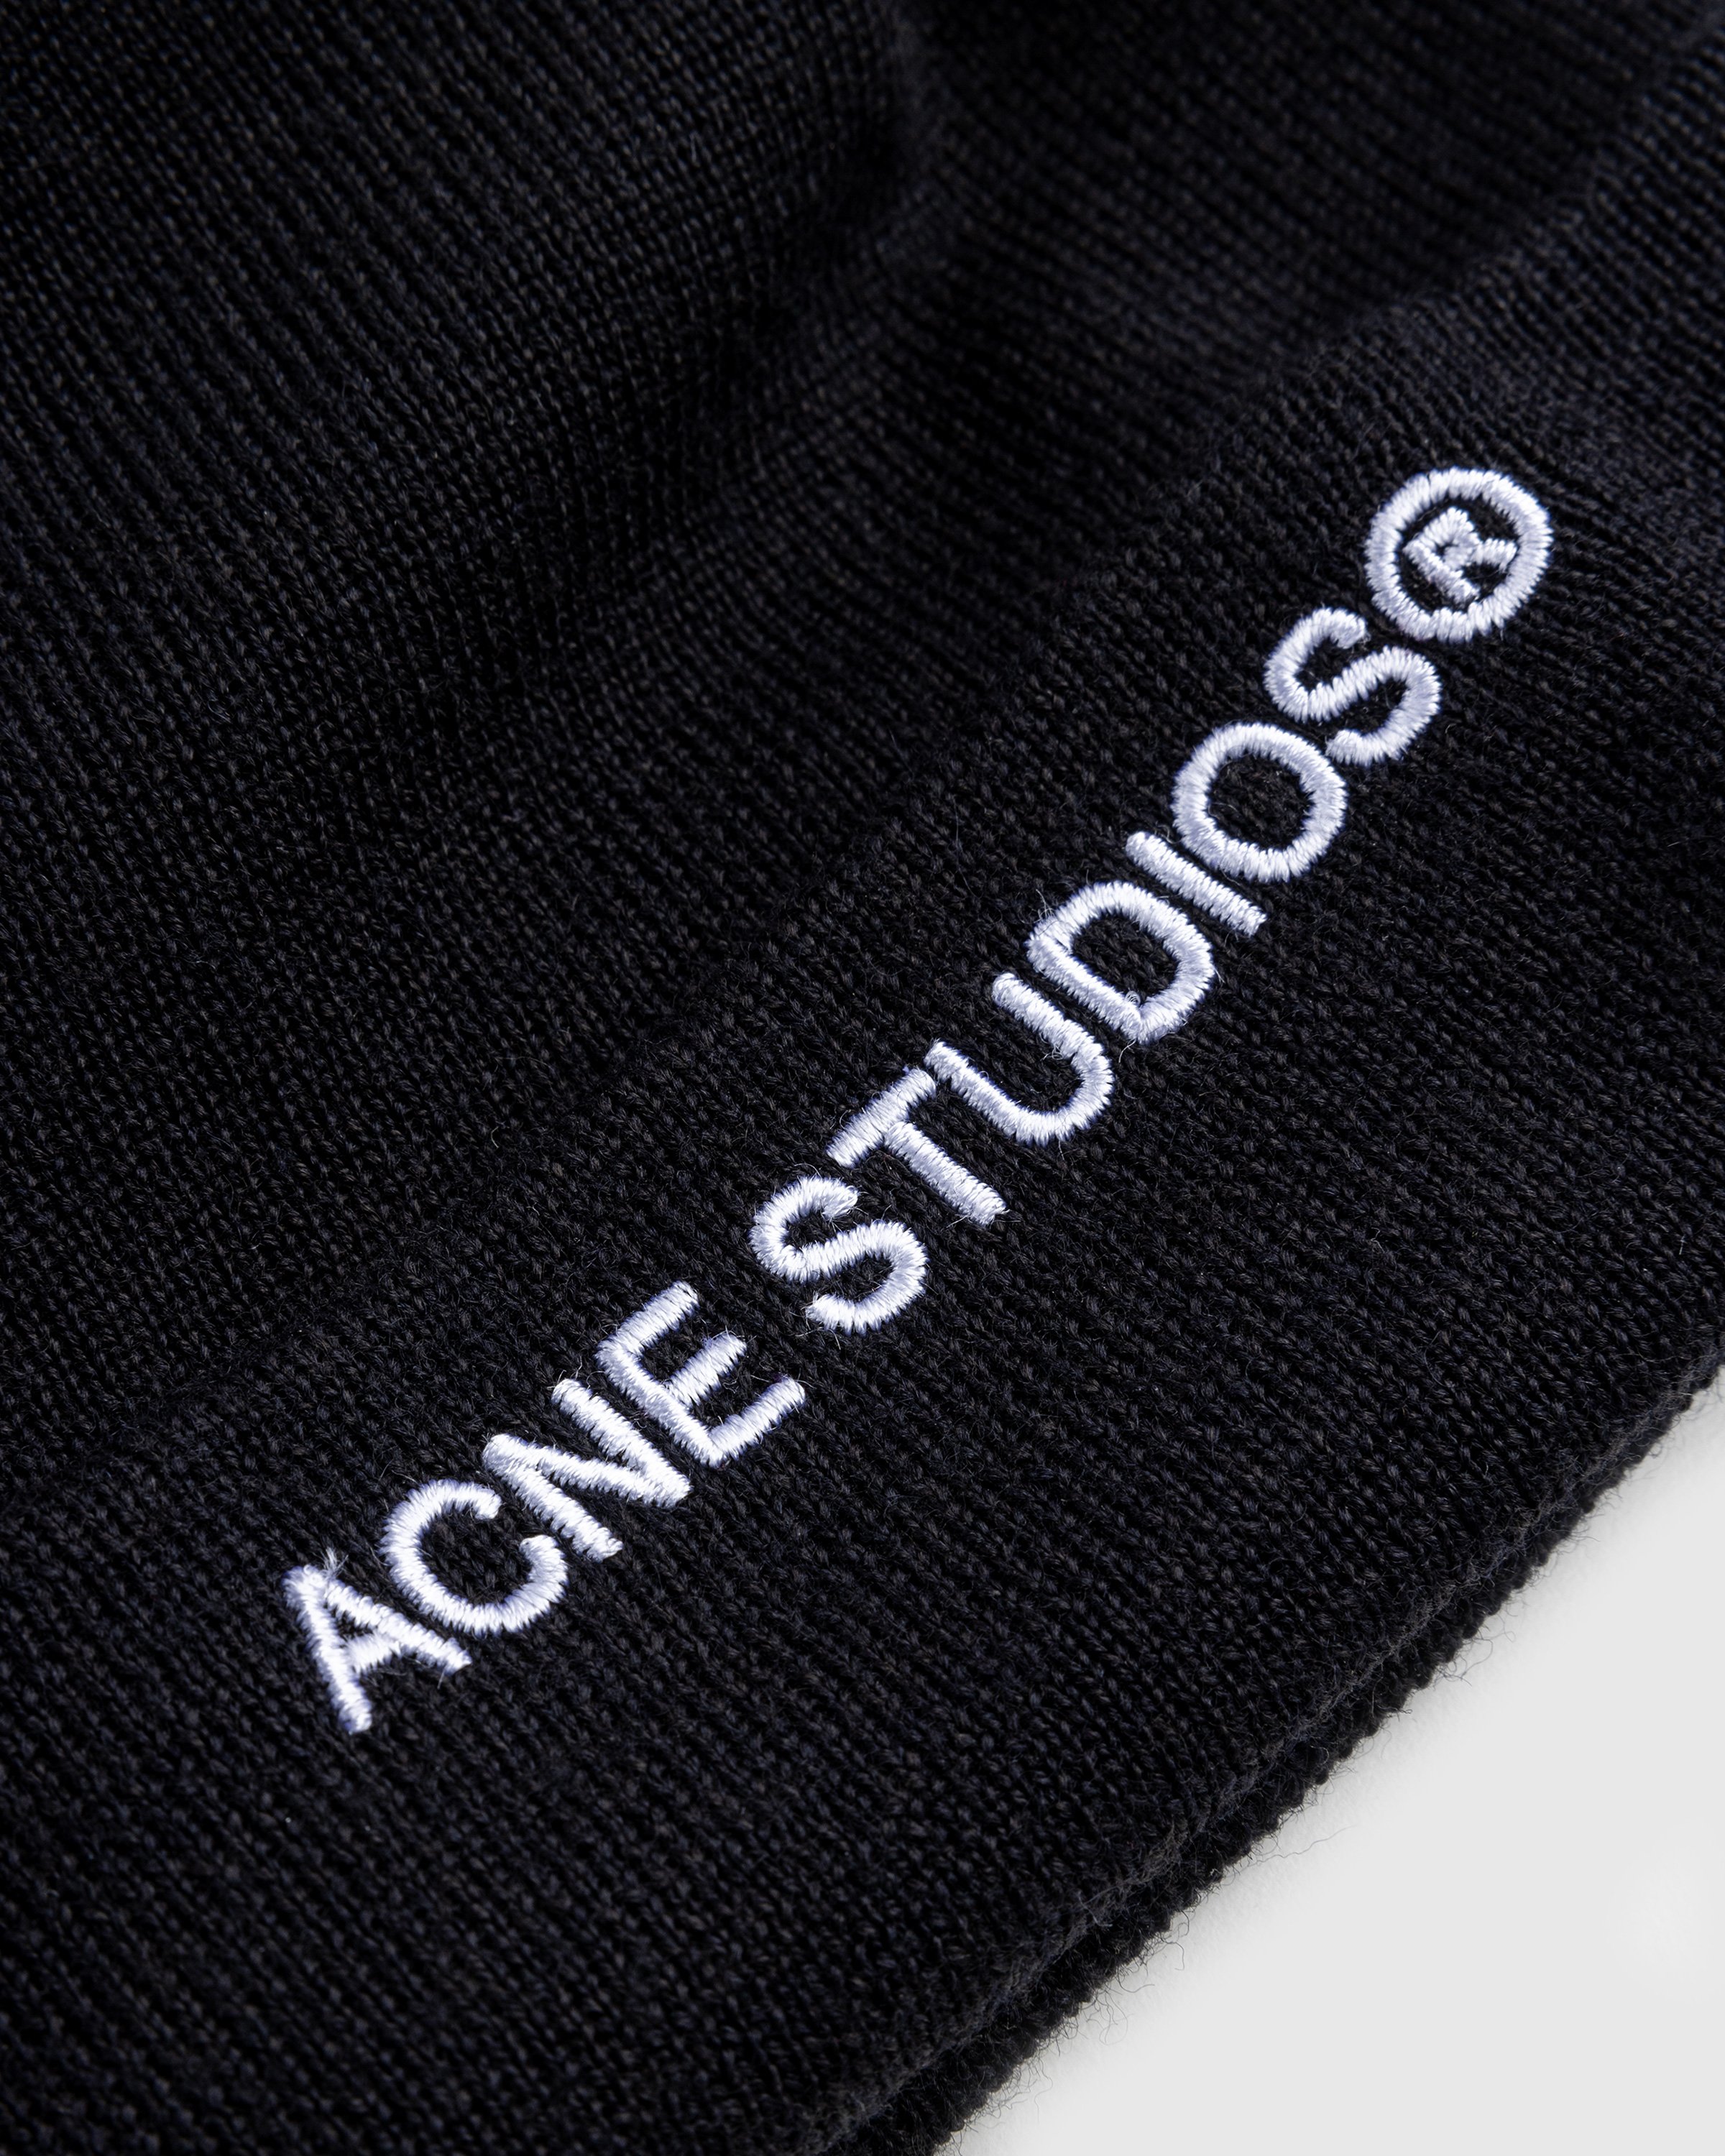 Acne Studios - FN-UX-HATS000252 Black - Accessories - Black - Image 4